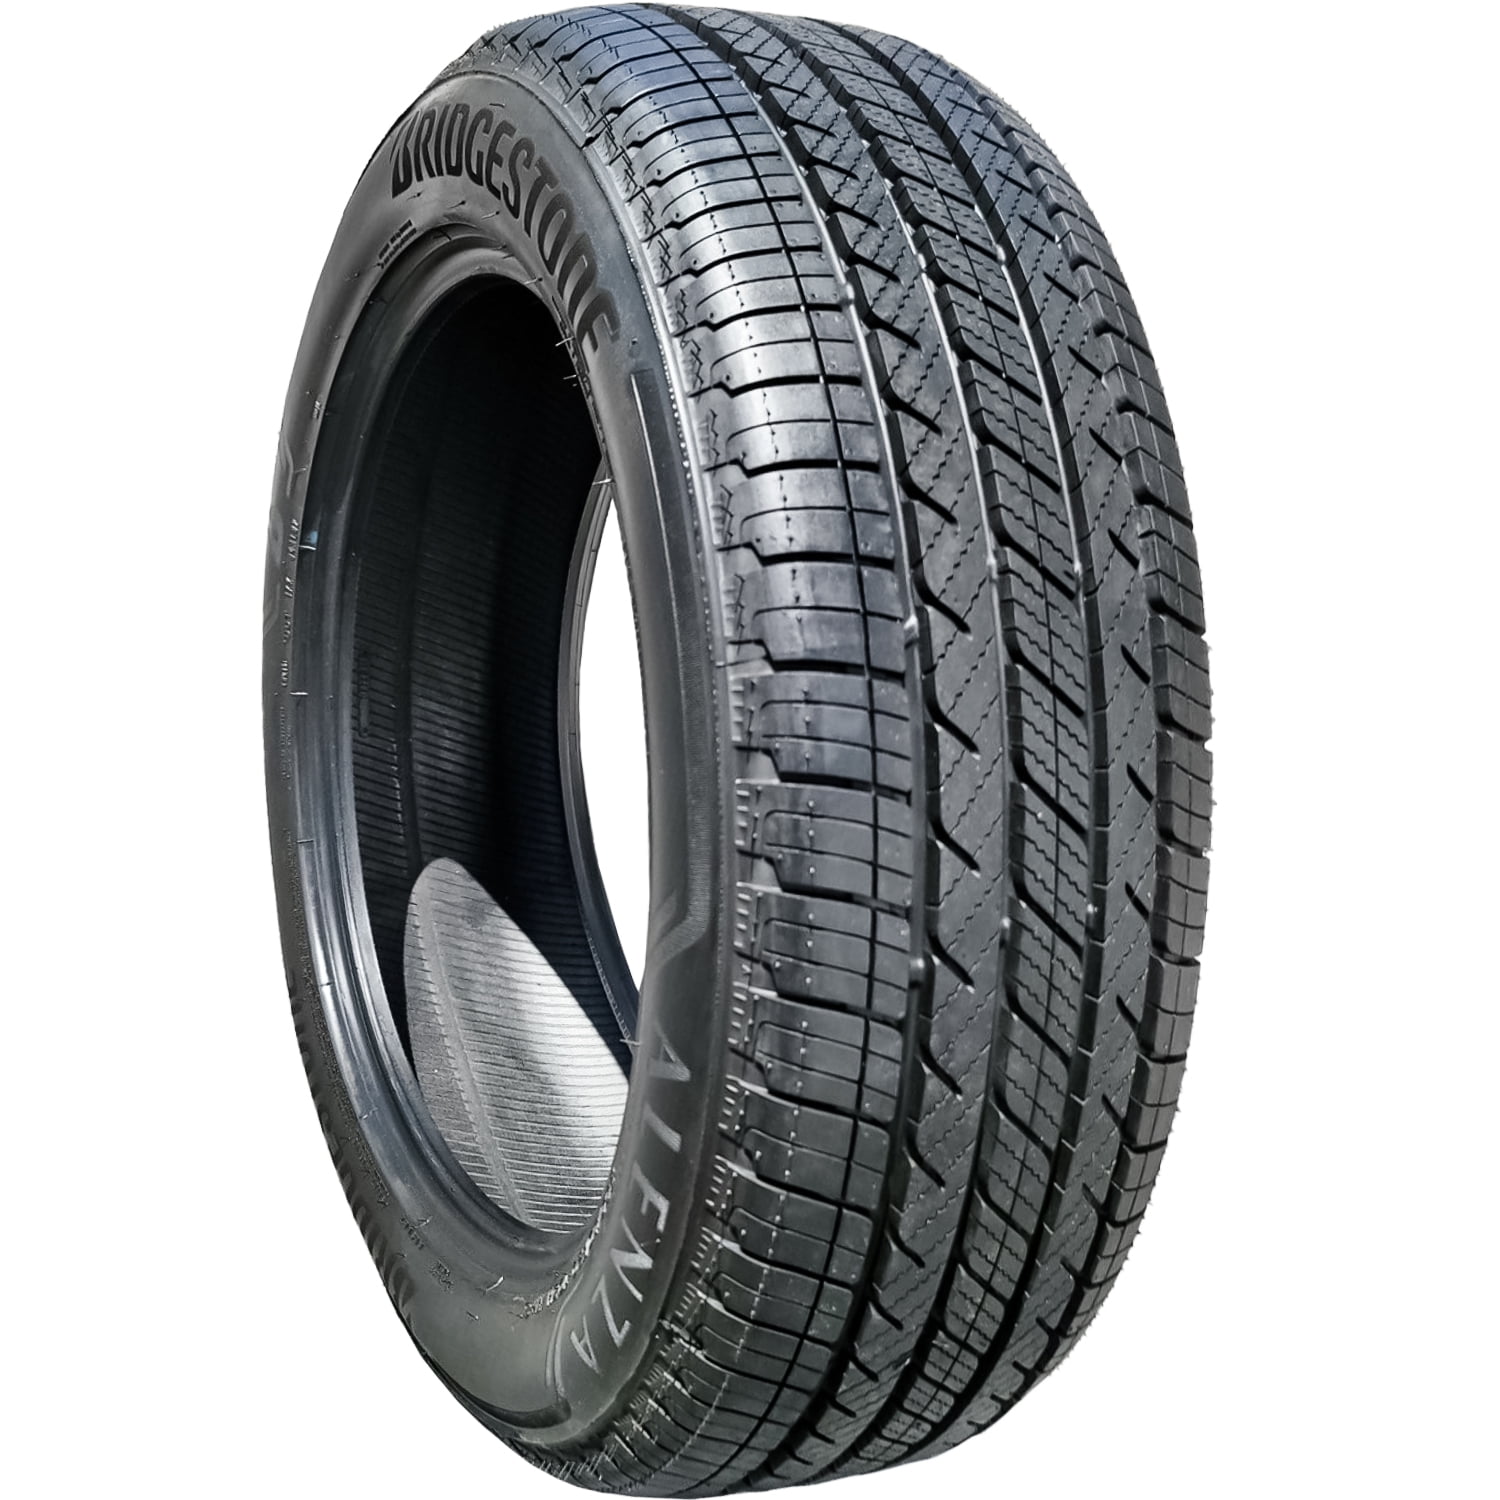 Bridgestone Alenza Sport A/S 235/65R17 104H AS All Season Tire